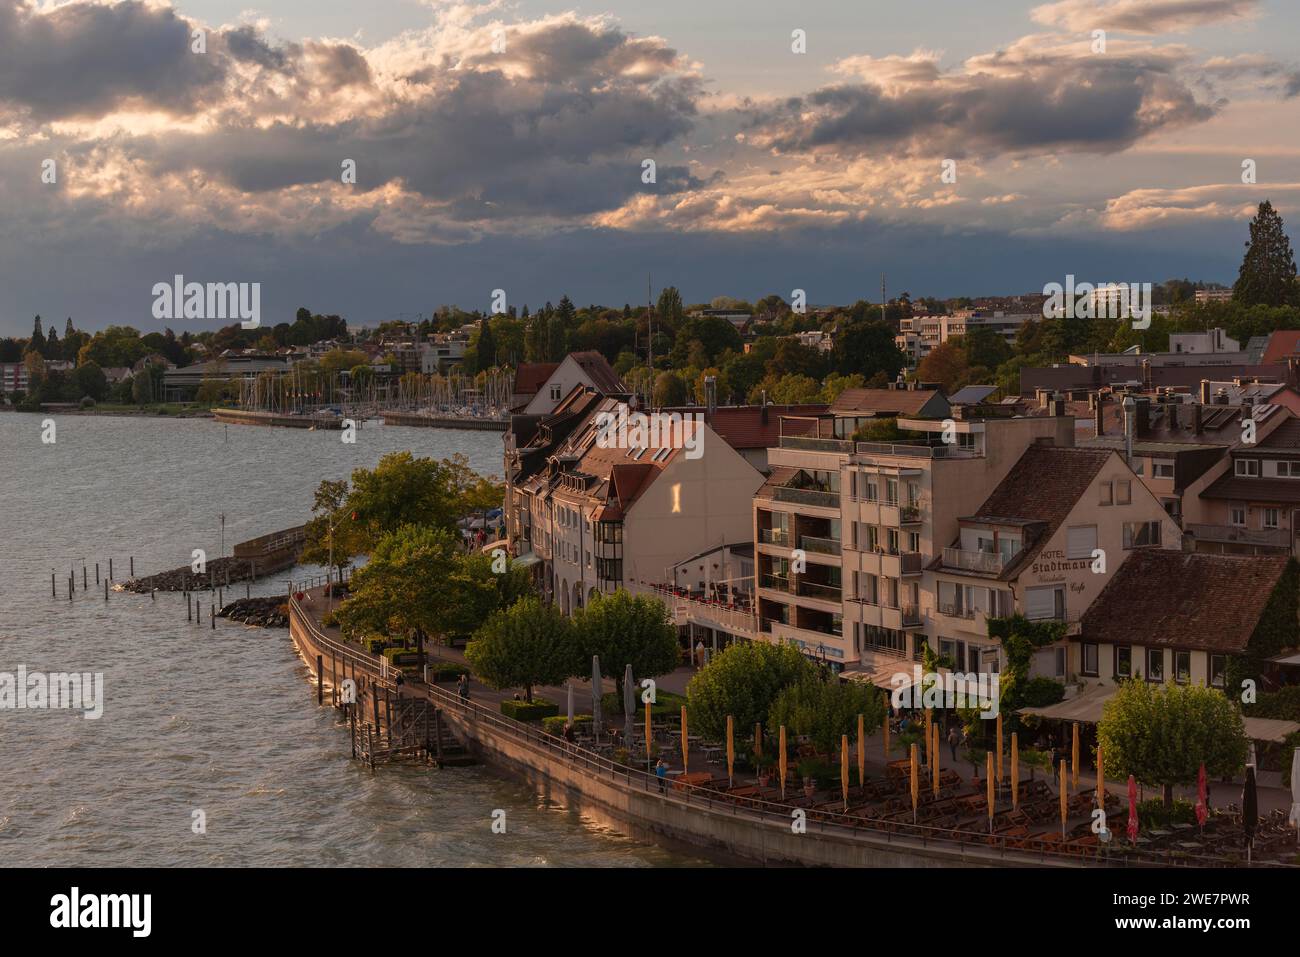 Cityscape, waterfront promenade, marina, evening light, Friedrichshafen on Lake Constance Baden-Wuerttemberg, Germany Stock Photo